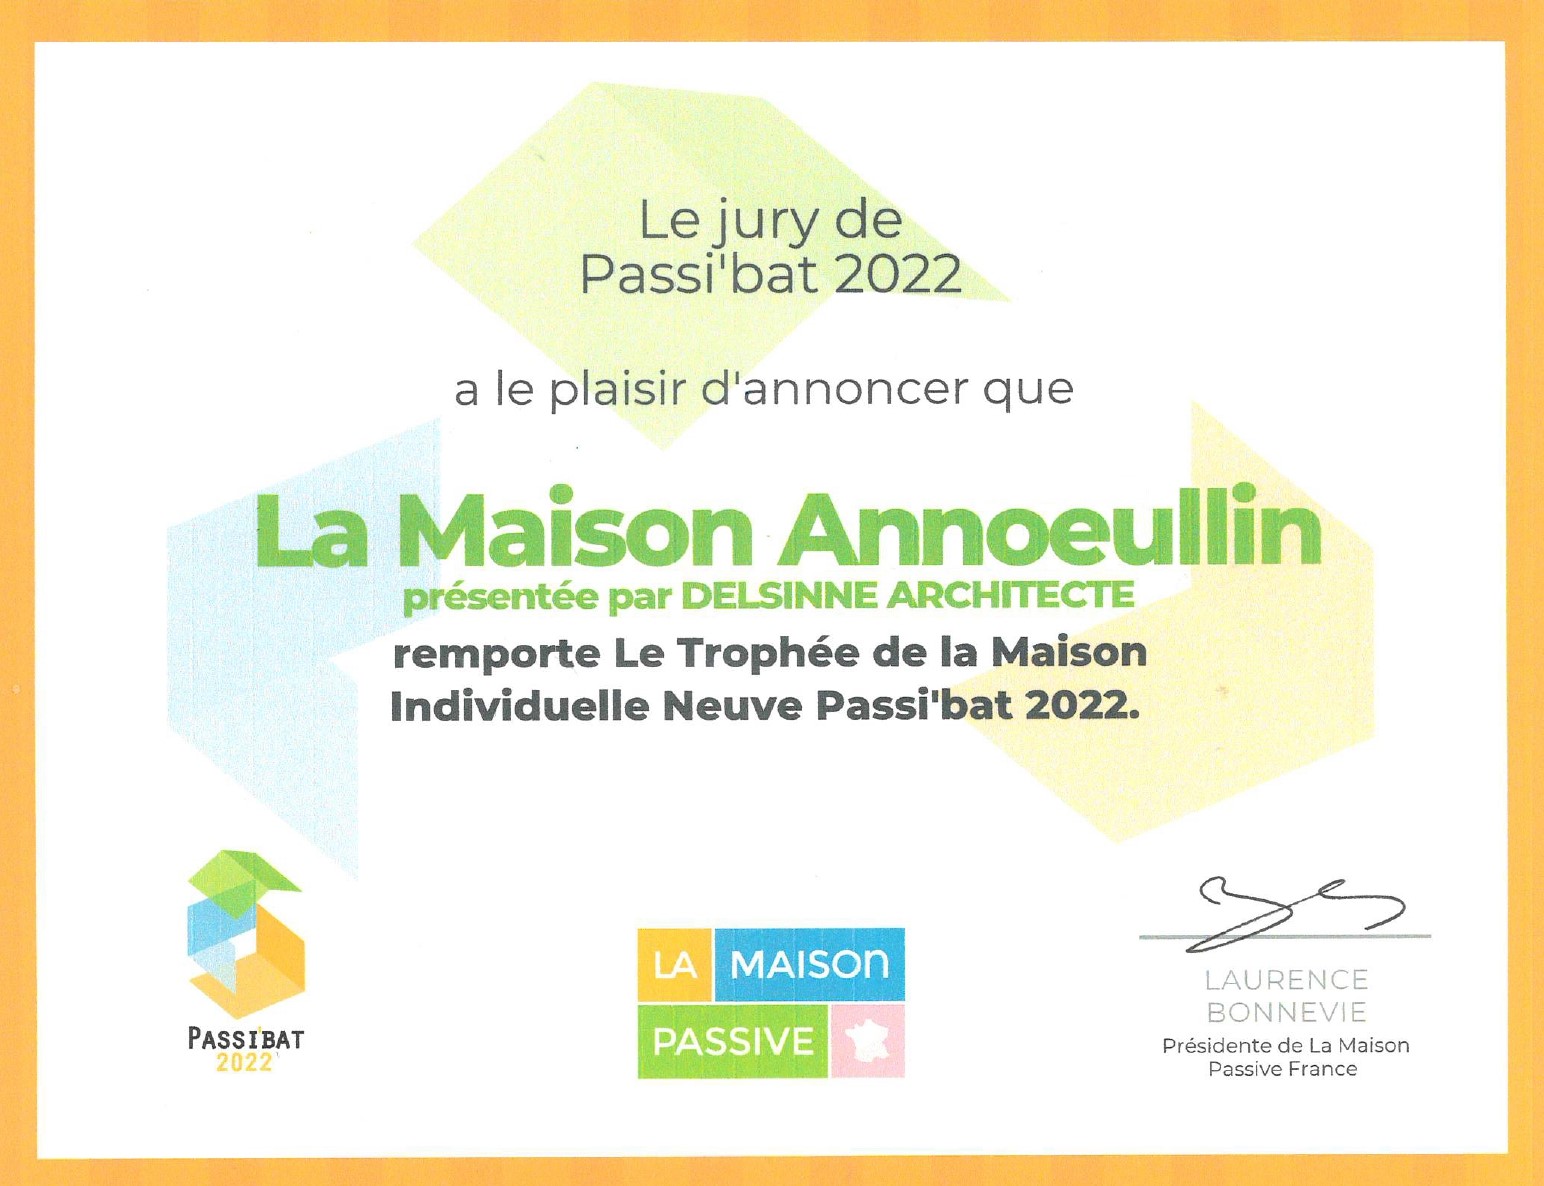 Trophee PASSIBAT 2022 MP ANNOEULLIN_page-0001